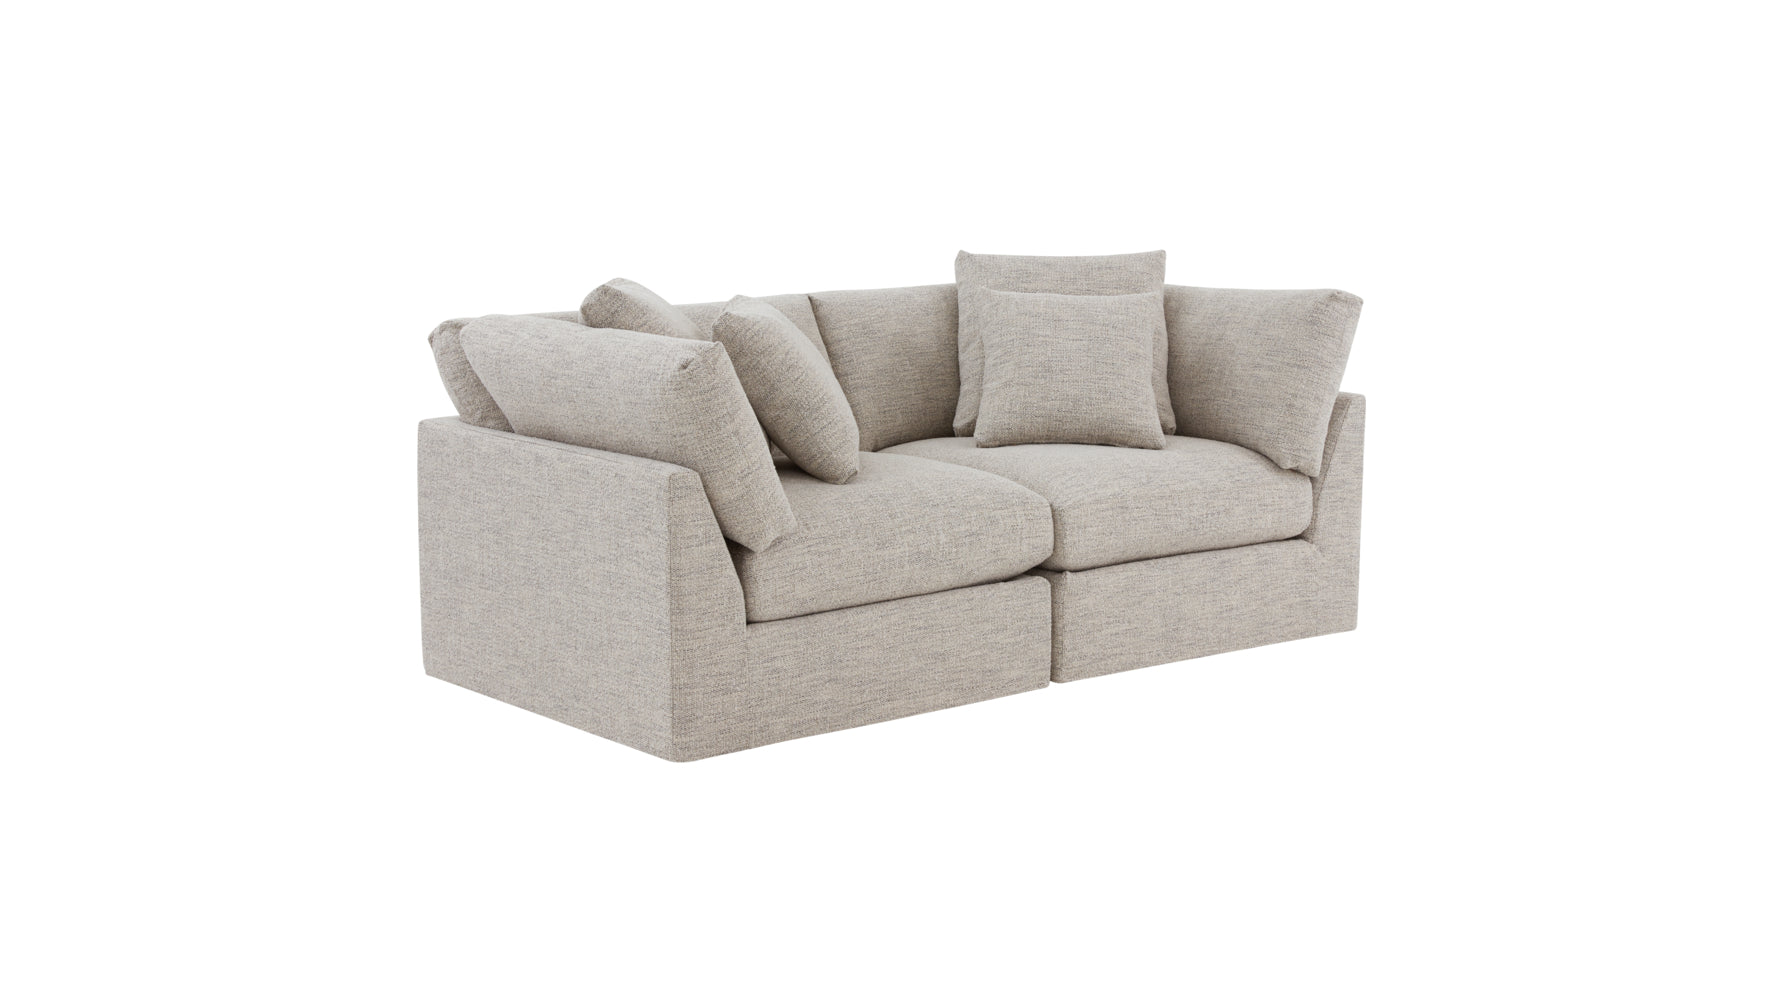 Get Together™ 2-Piece Modular Sofa, Large, Oatmeal - Image 3